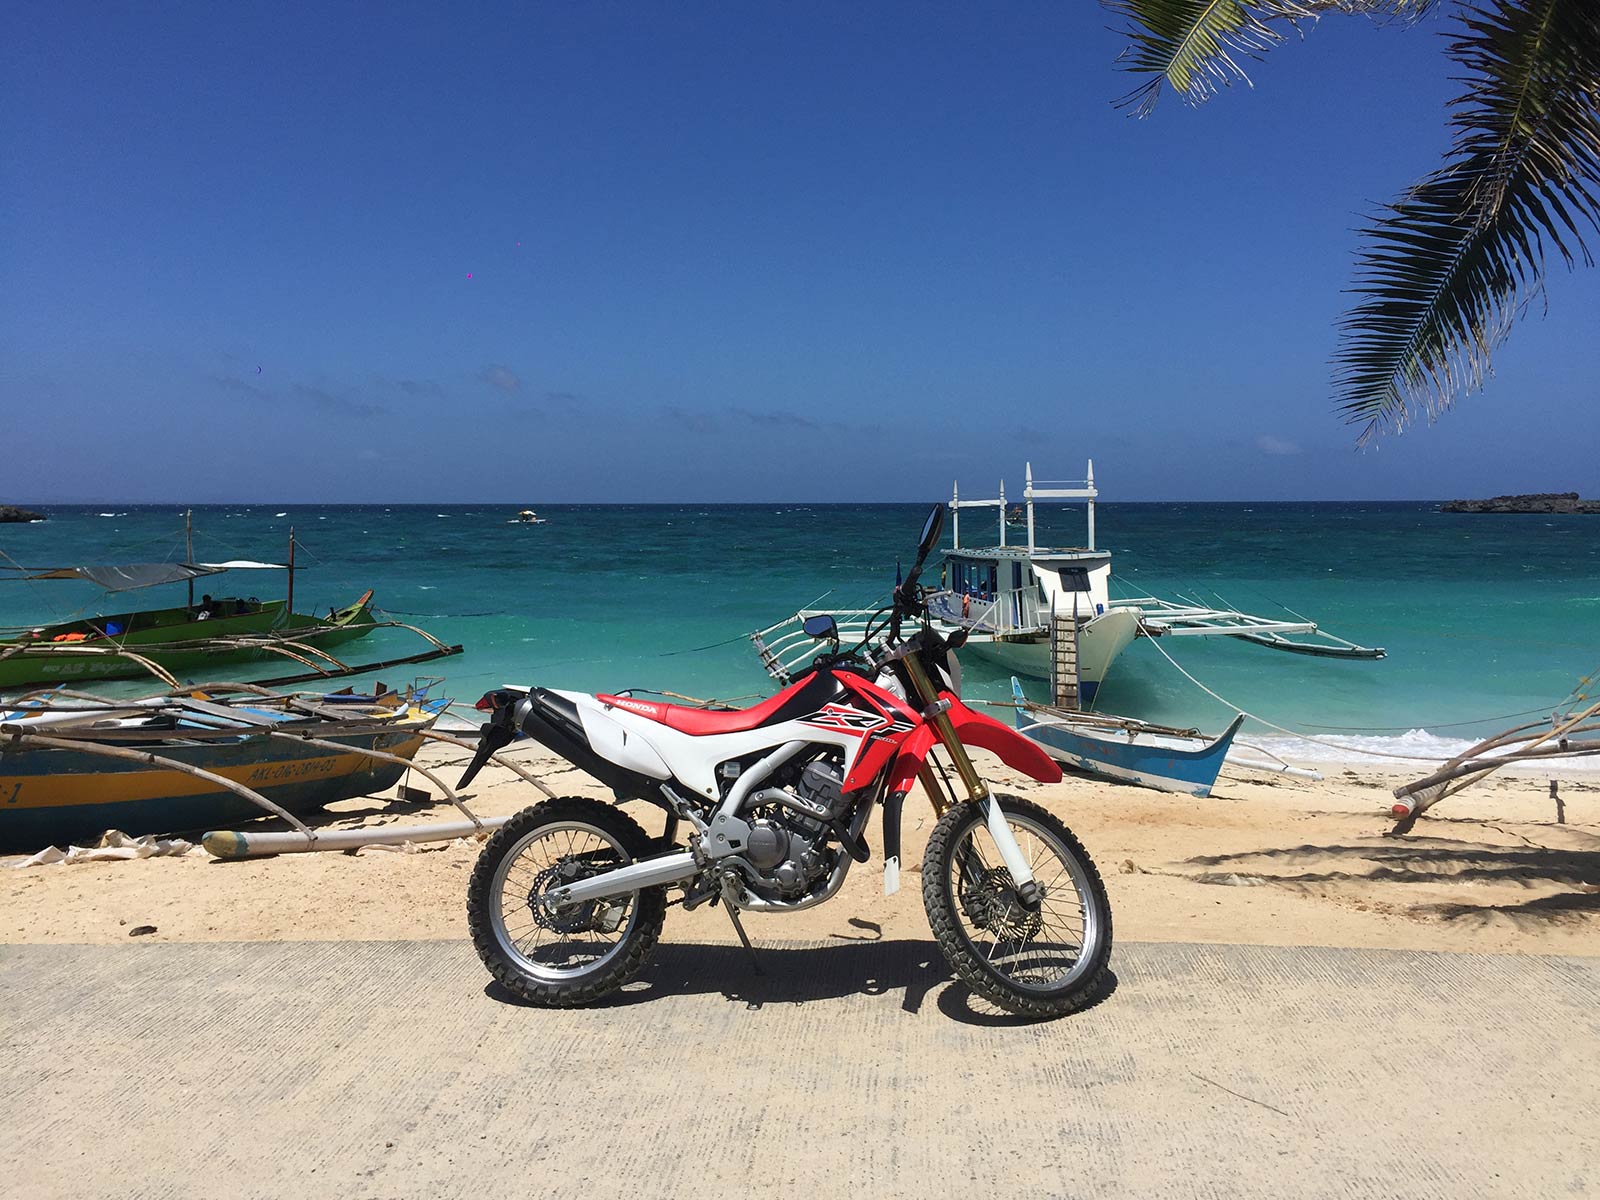 Motocross bike at beach in Boracay, Philippines. A week at the Shangri-La Resort, Boracay